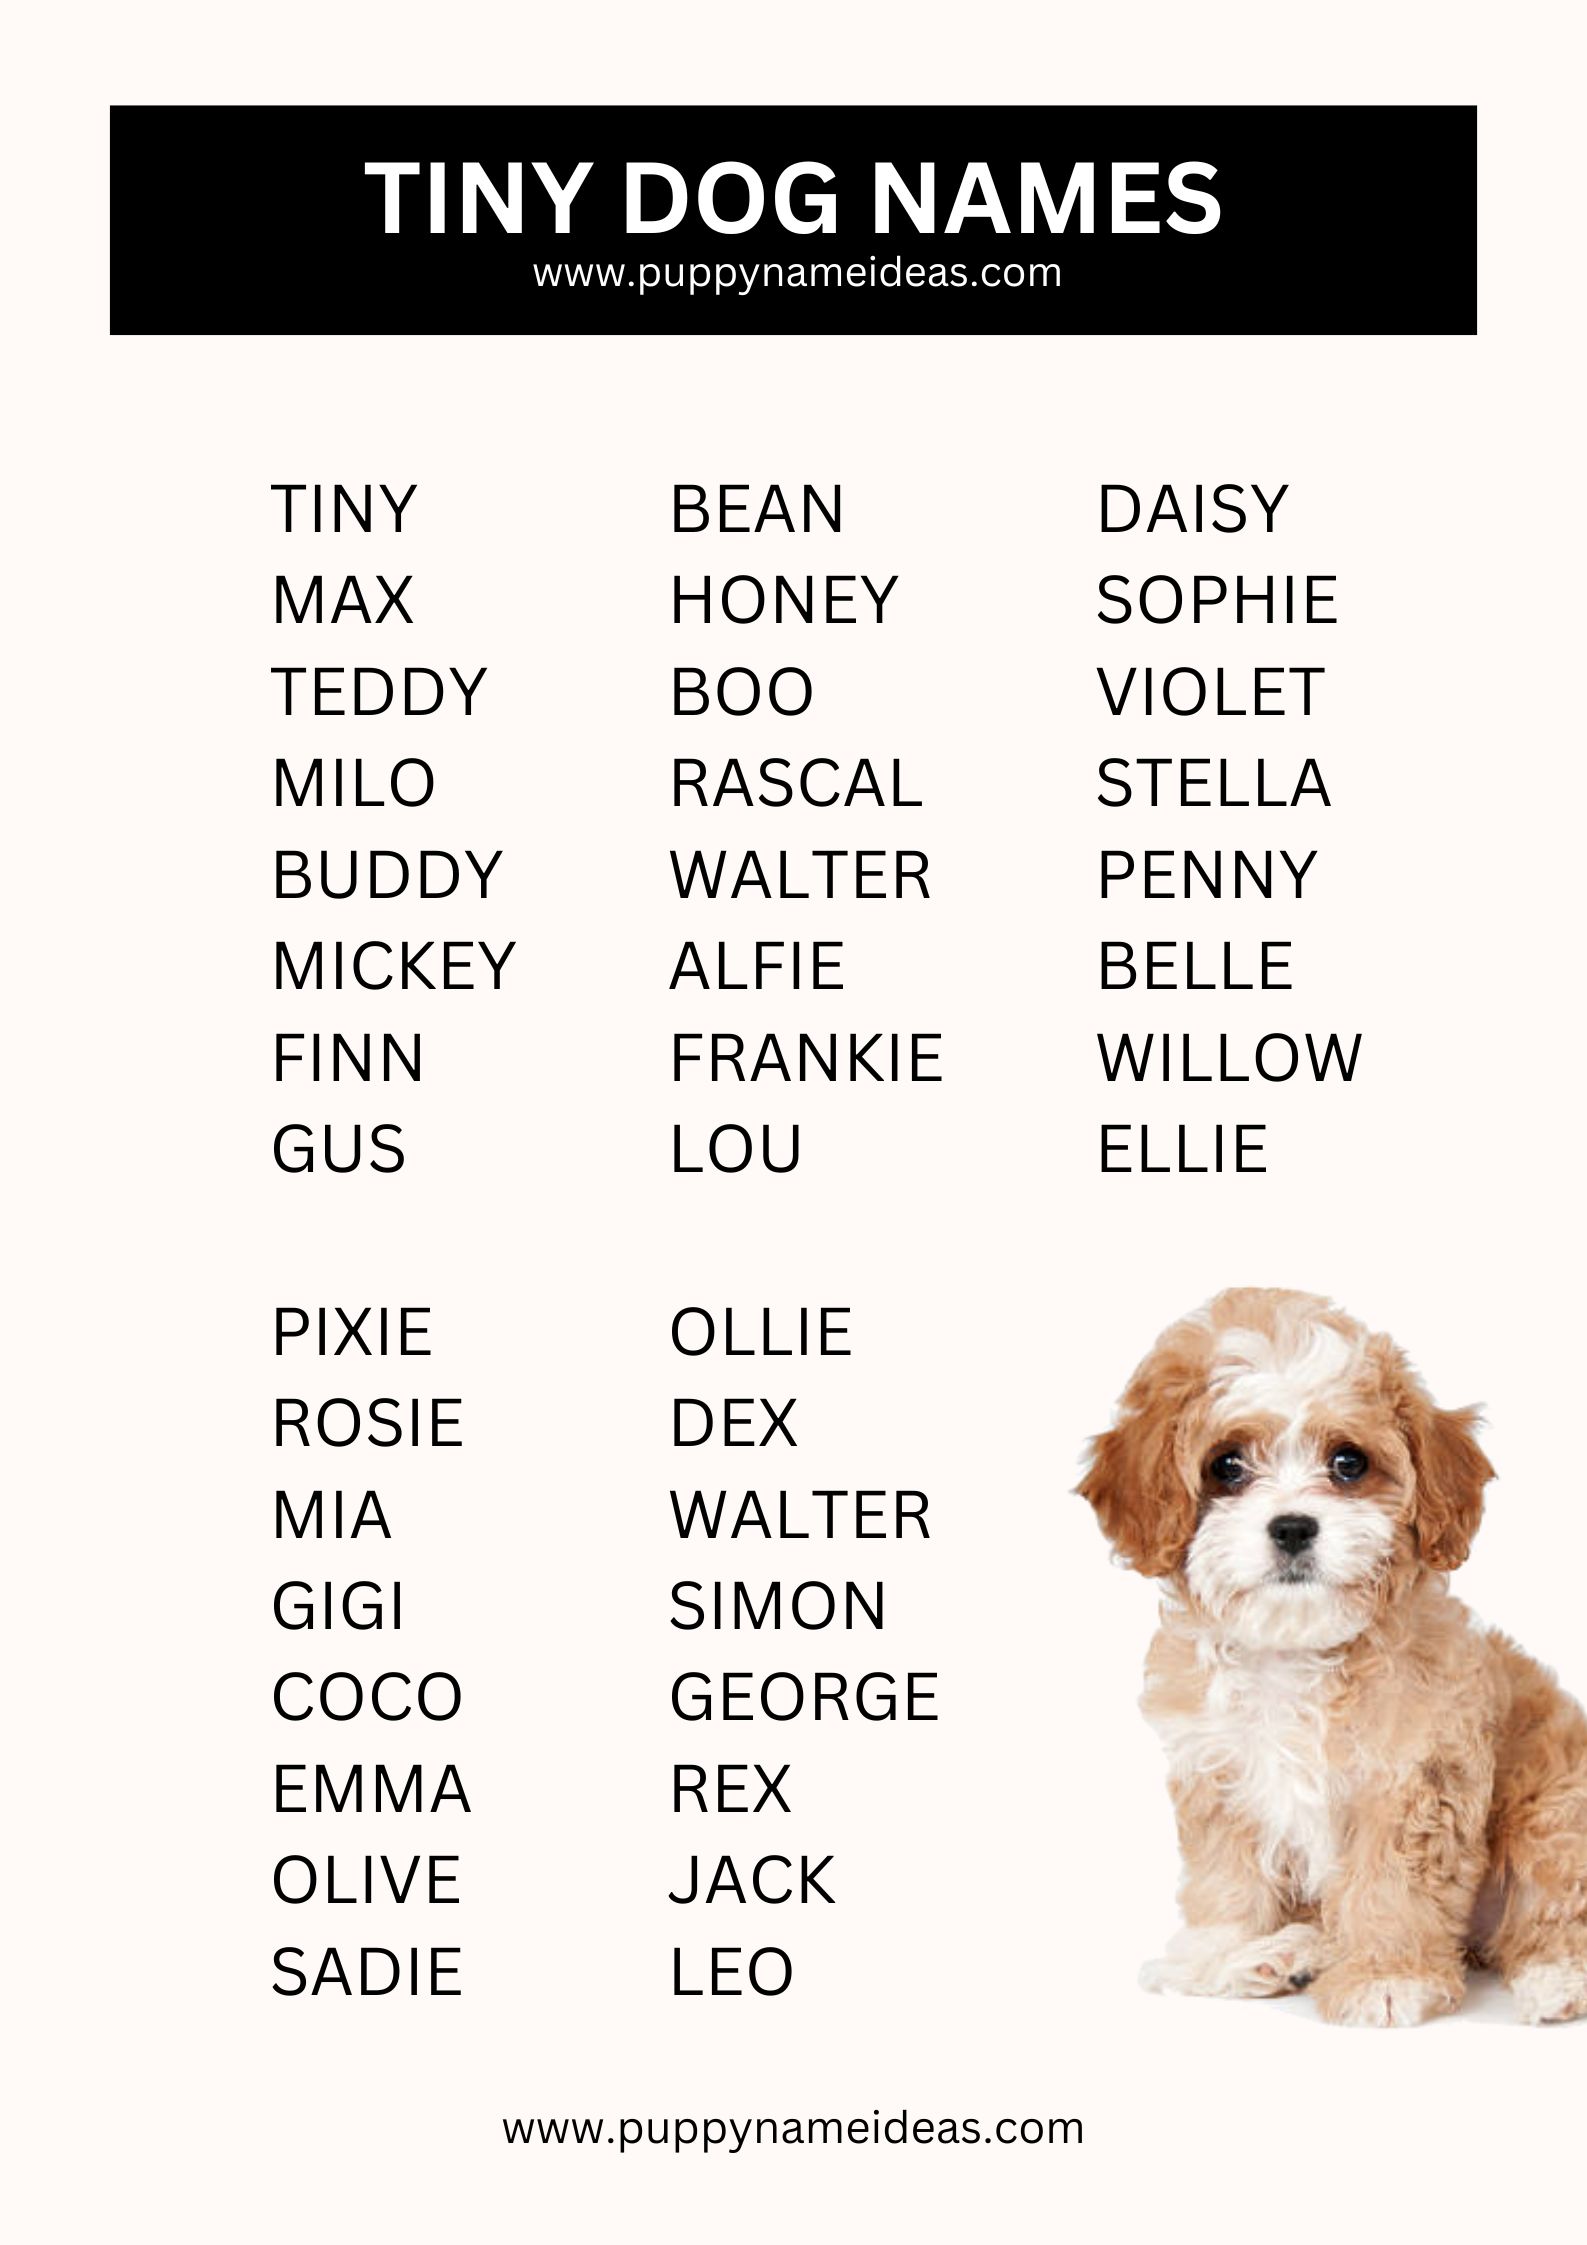 List Of Tiny Dog Names